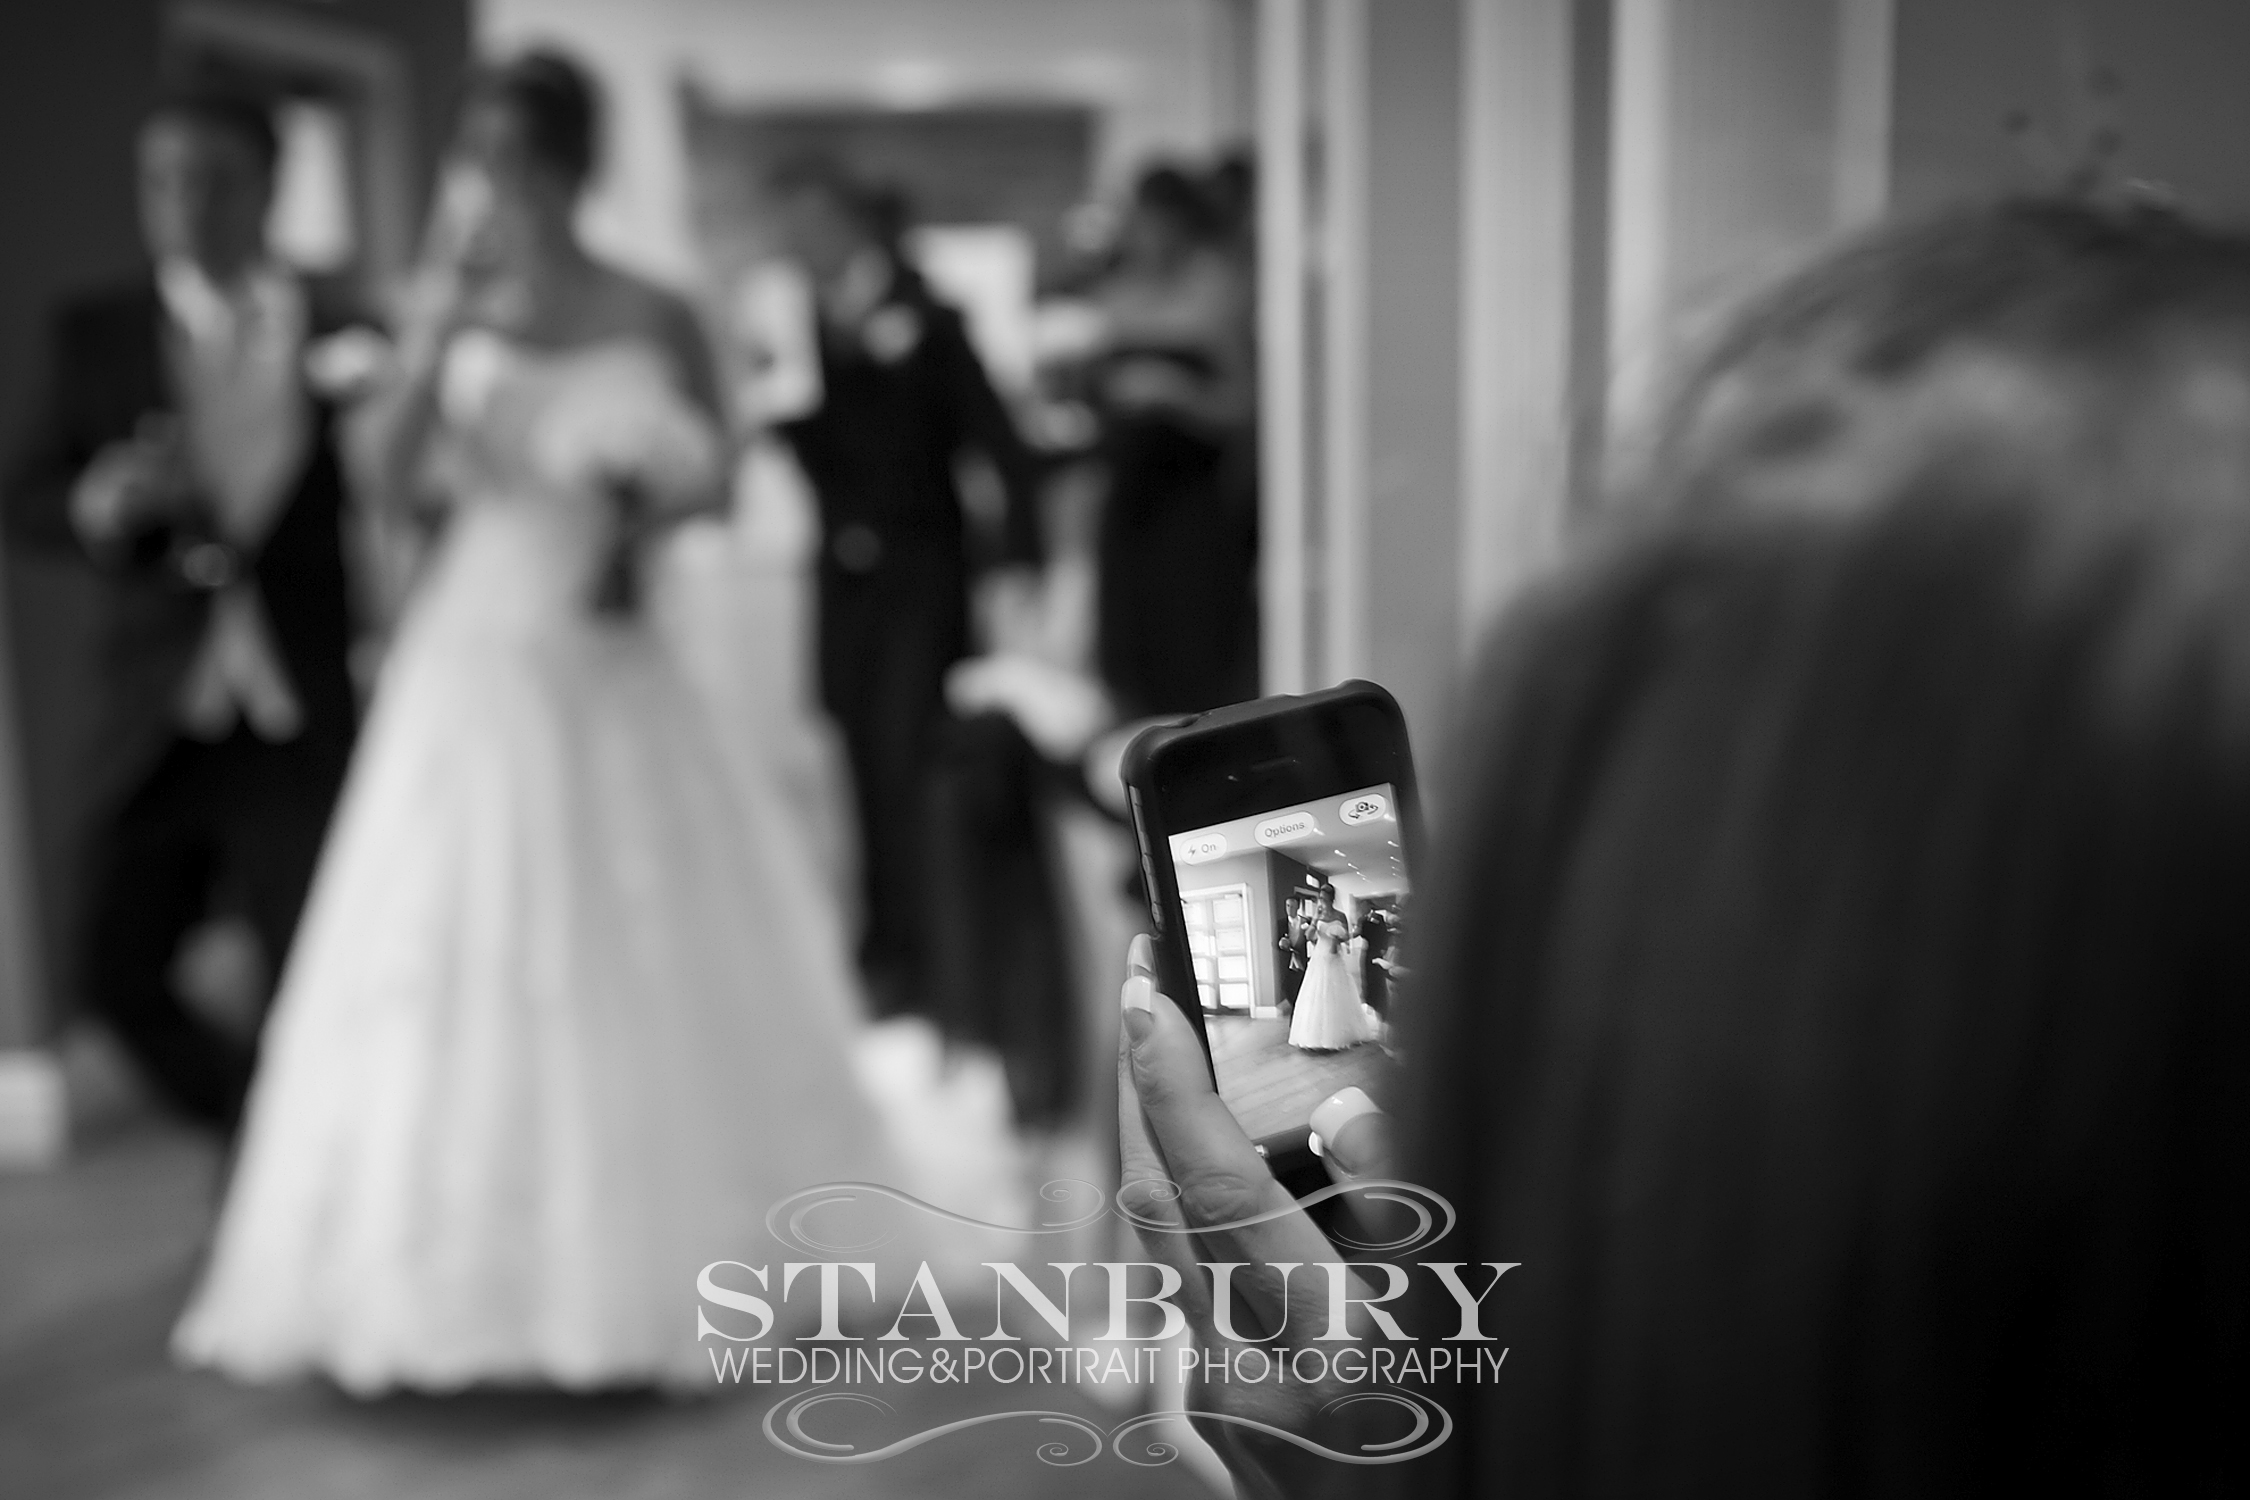 wedding photography at mitton hall by stanbury studio.com